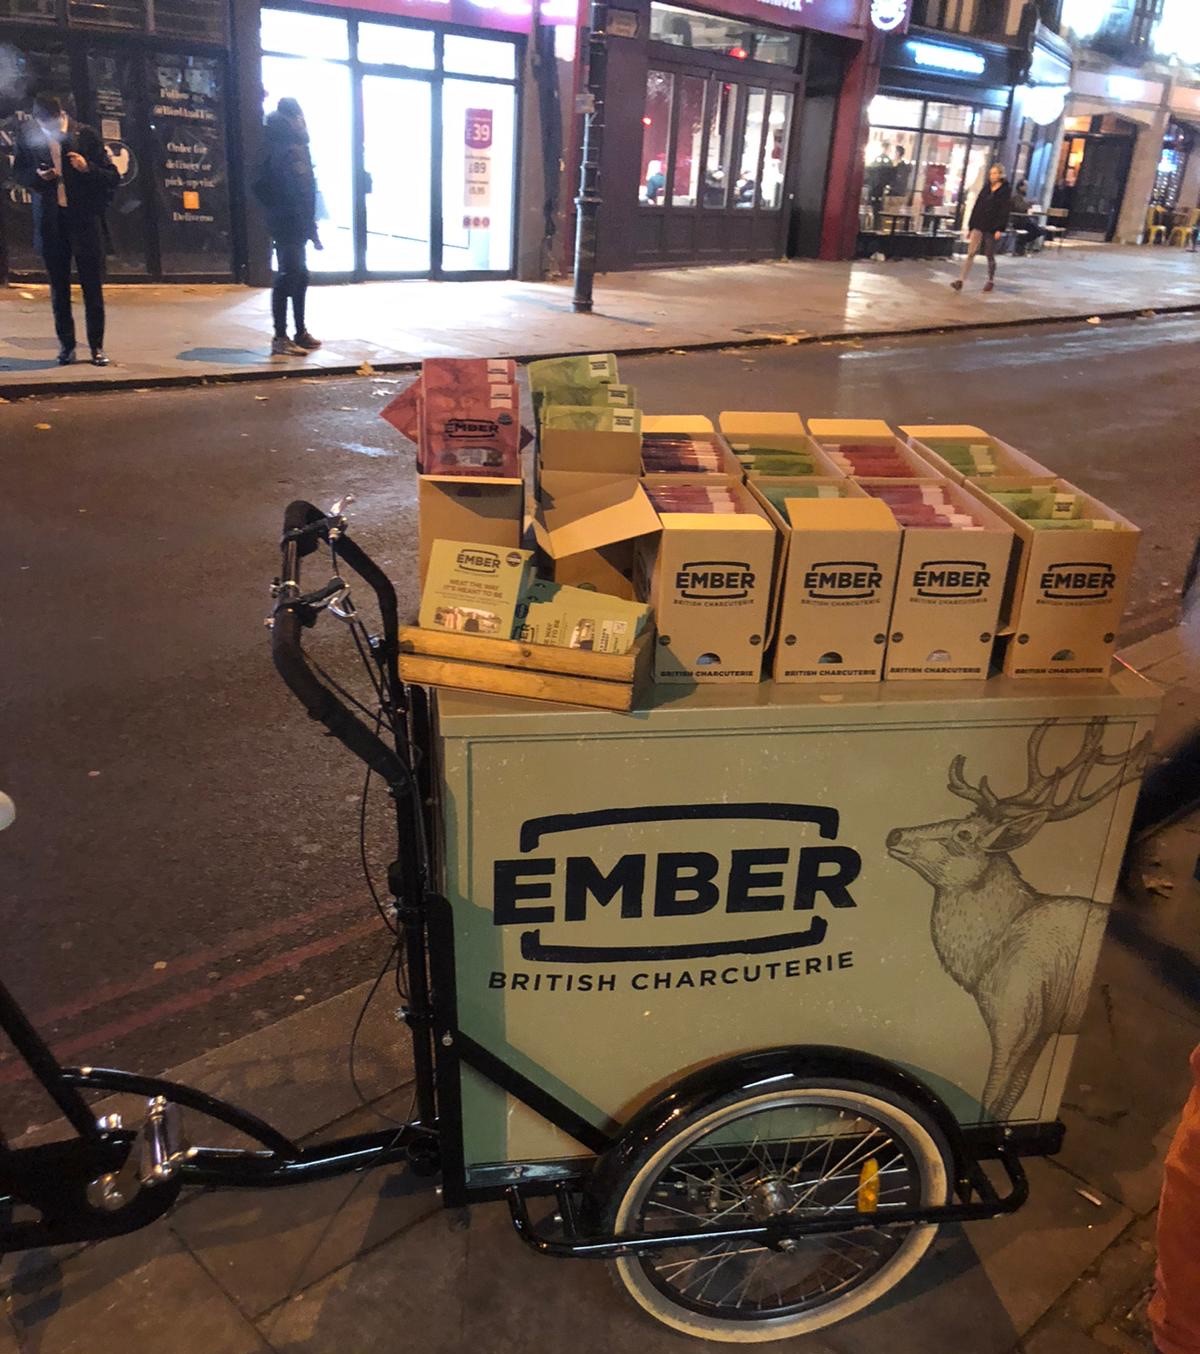 Ember Green British Charcuterie promotional bike